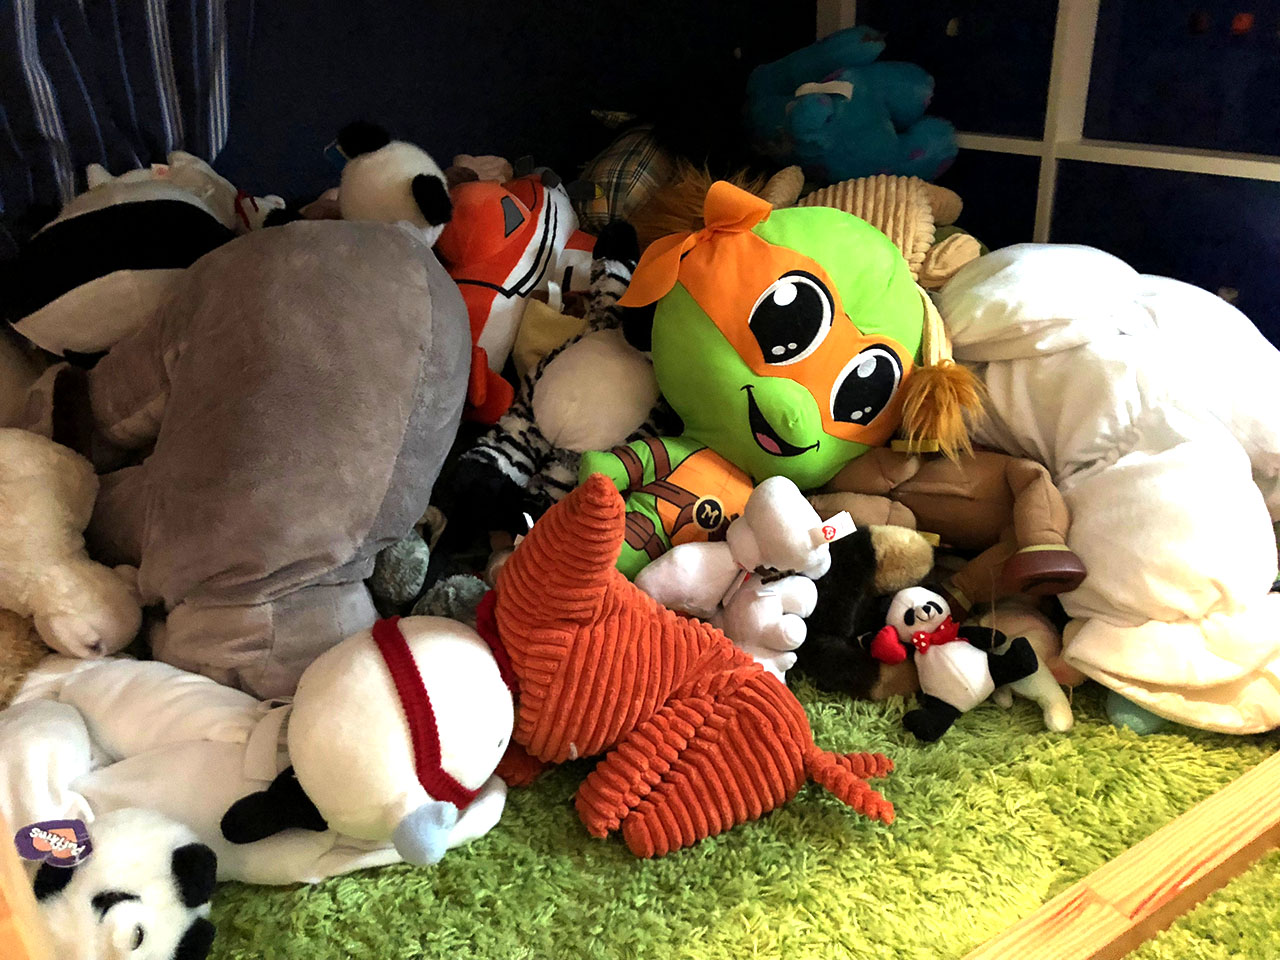 Kids Room with Too Many Stuffed Animals